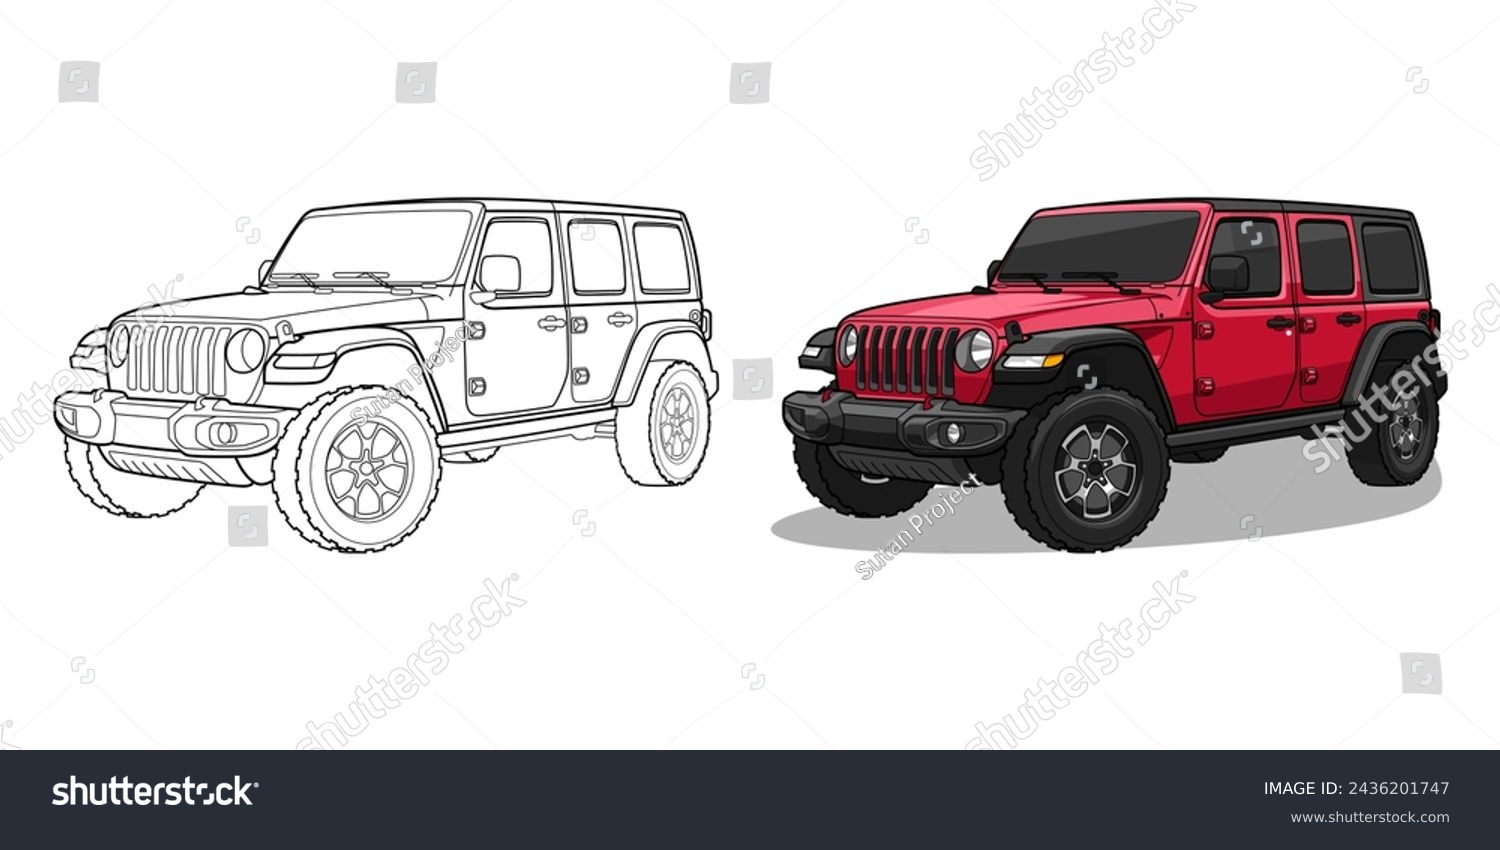 SVG of  4x4 off-road car vector llustration design. Illustration of a red 4x4 off-road car and line art of 4x4 off-road car. svg